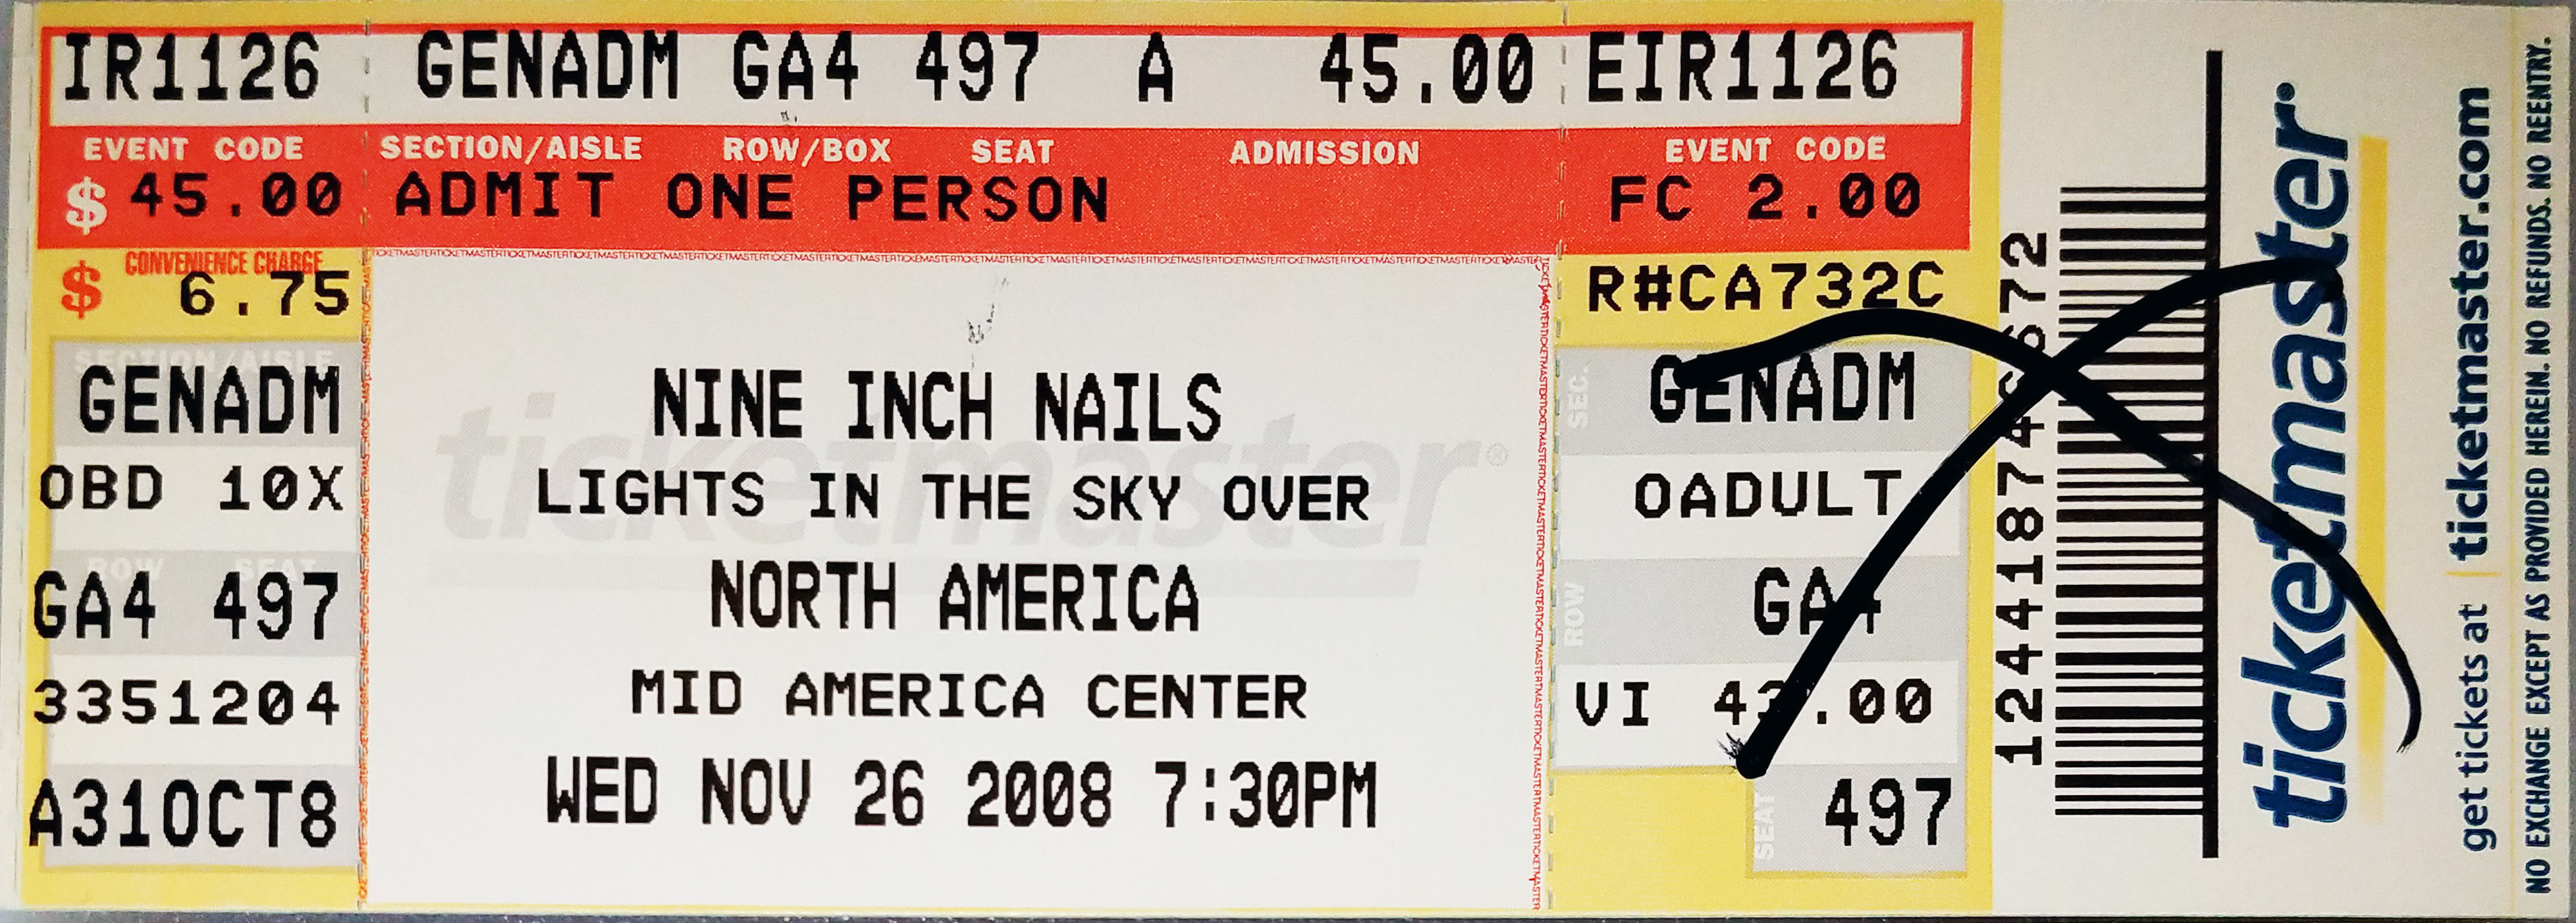 11/26/2008 Ticket